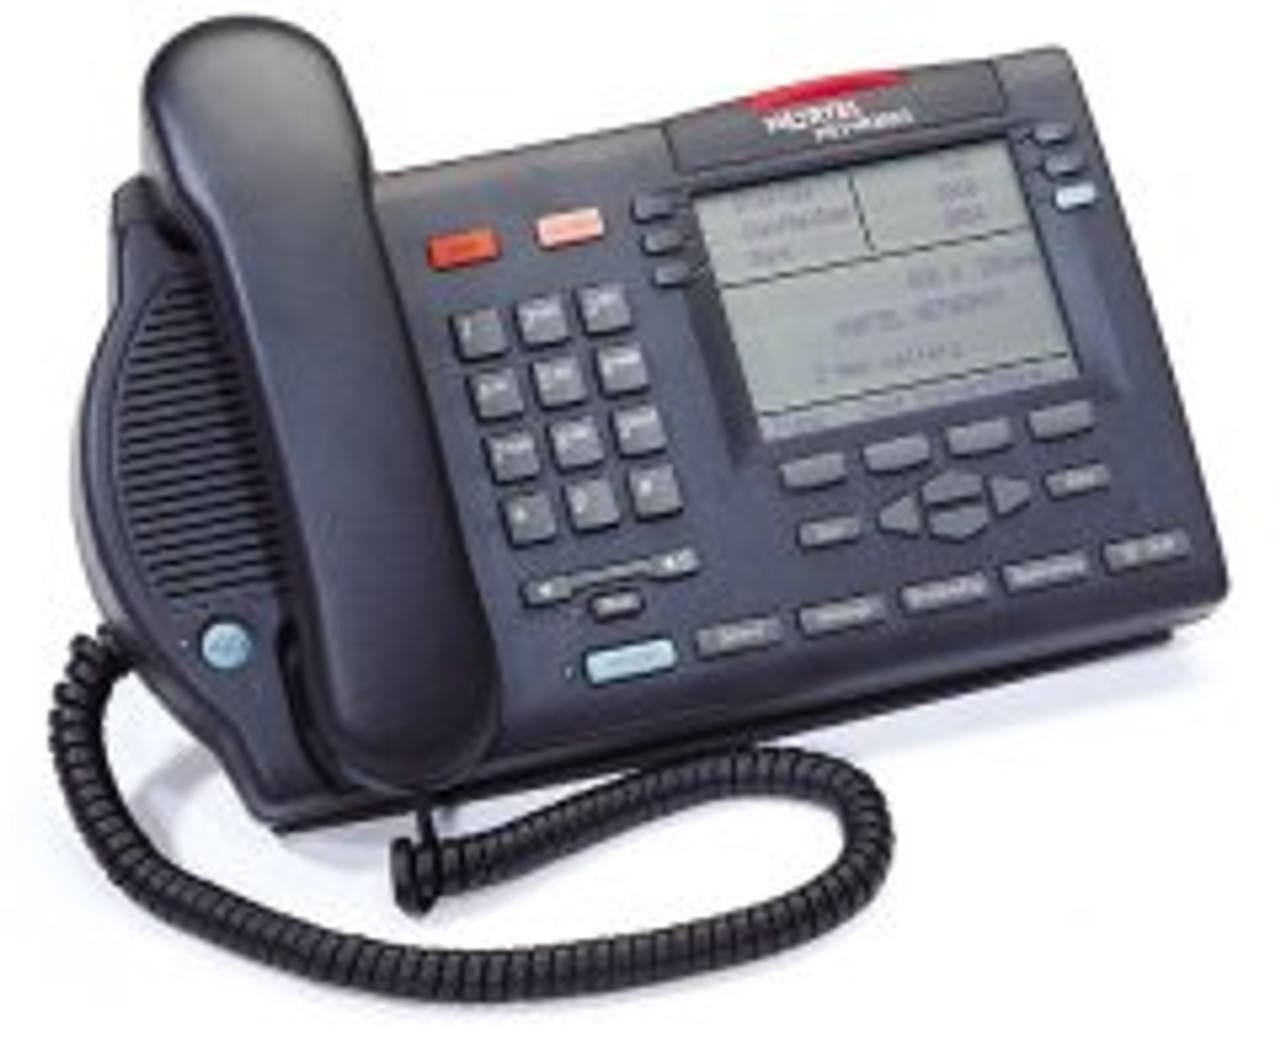 Nortel Meridian M3904 Phone NTMN34GA